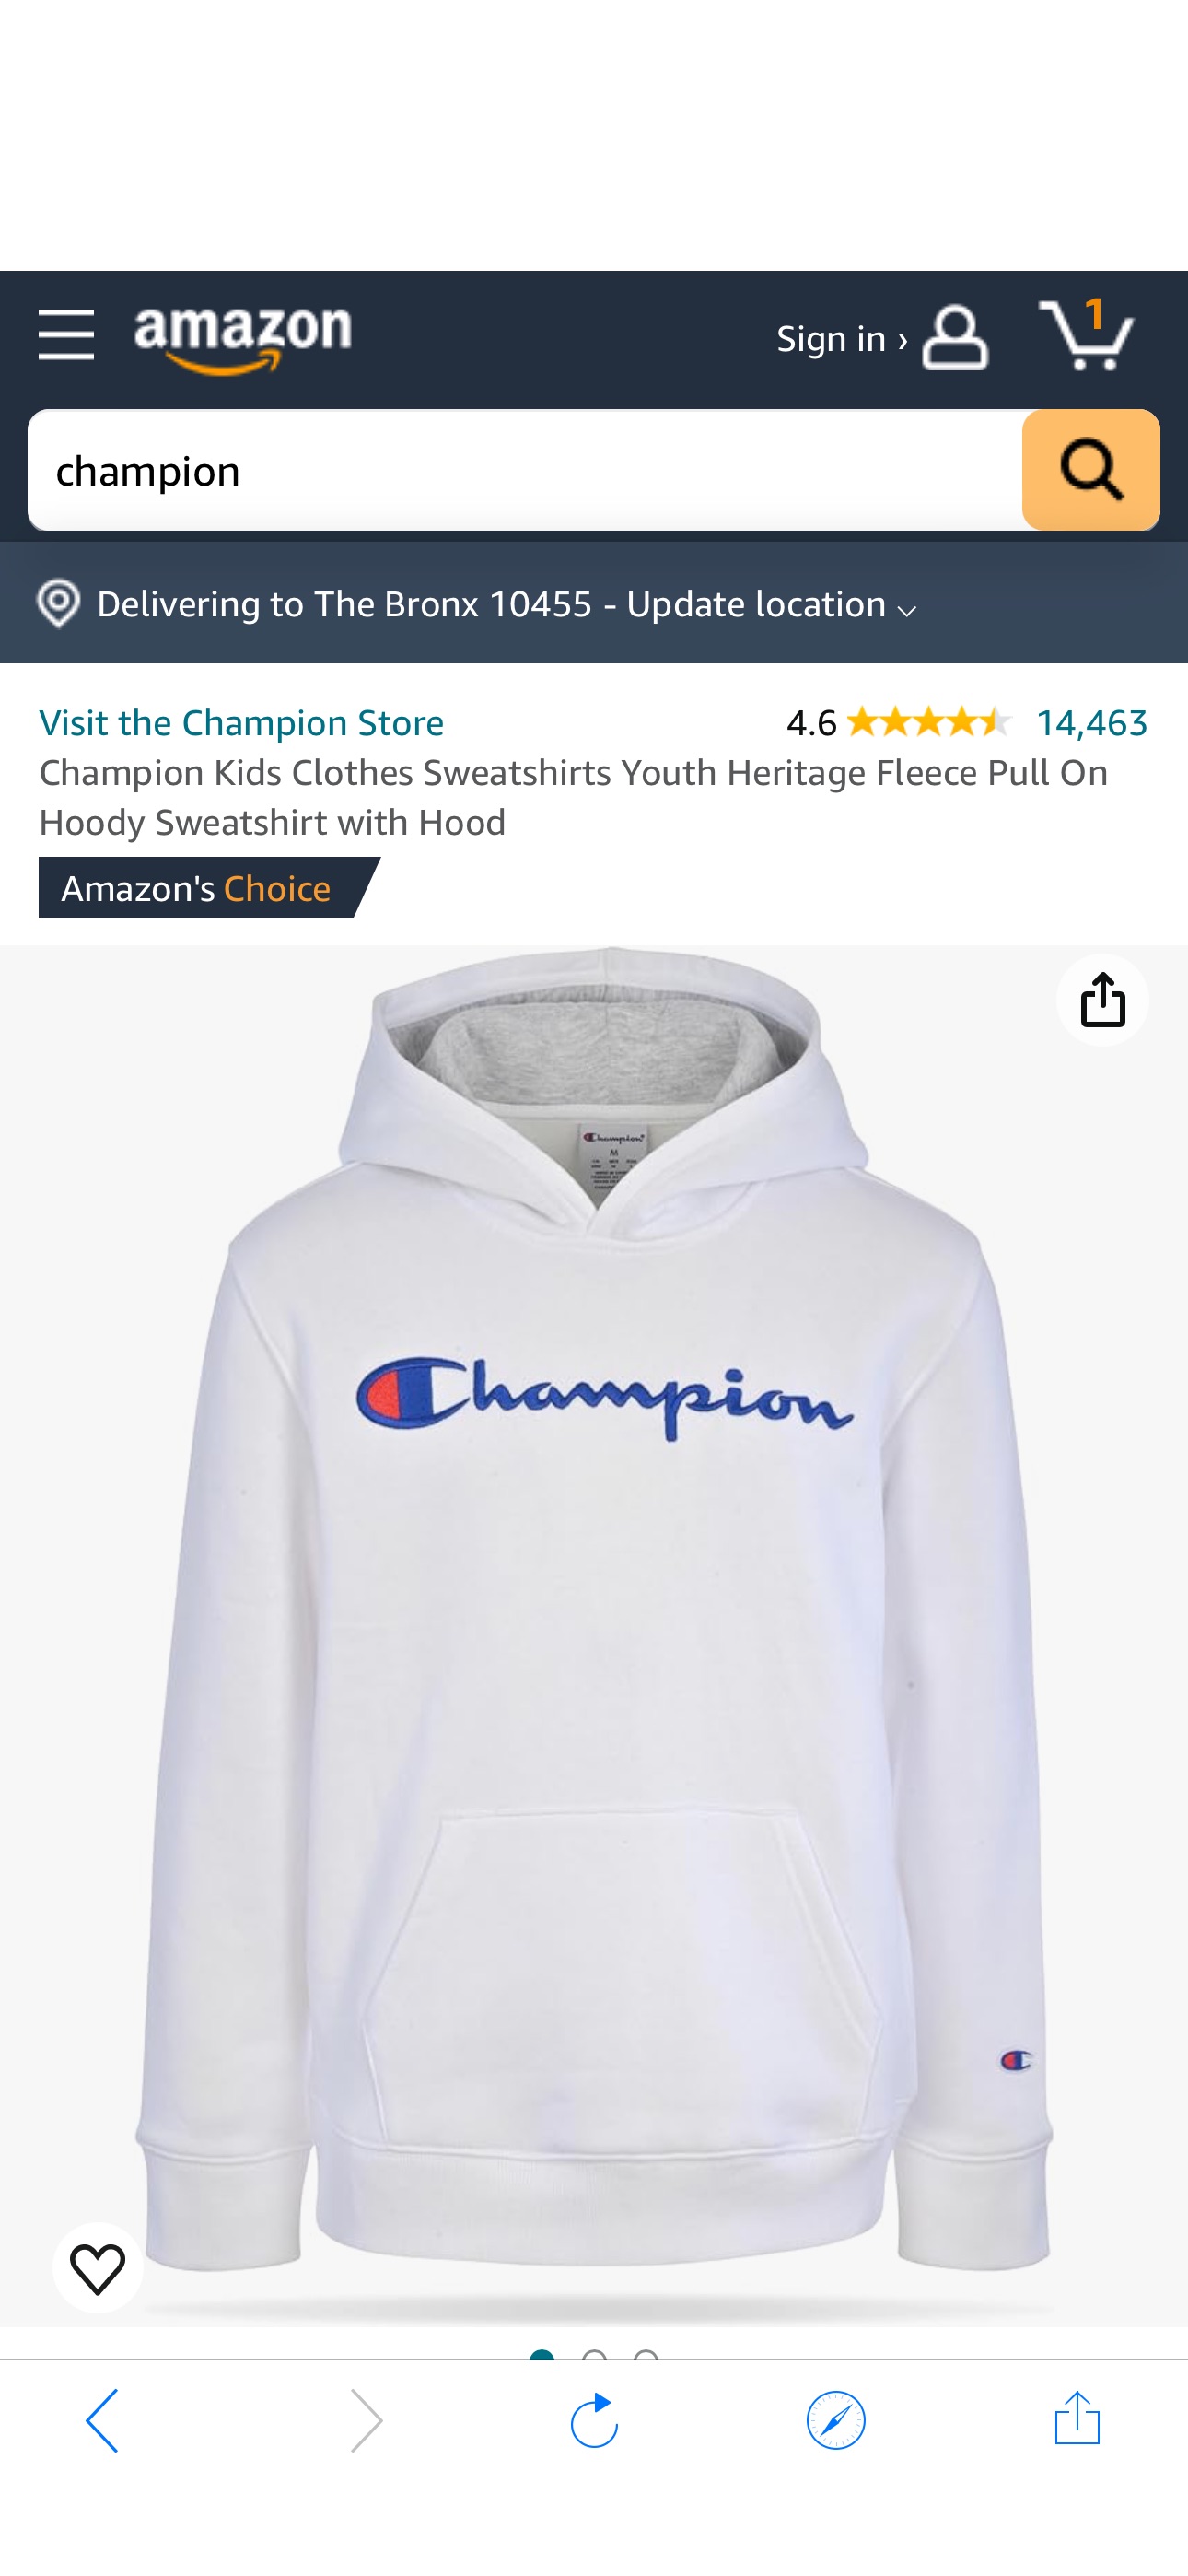 Amazon.com: Champion Kids Clothes Sweatshirts Youth Heritage Fleece Pull On Hoody Sweatshirt with Hood: Clothing, Shoes & Jewelry